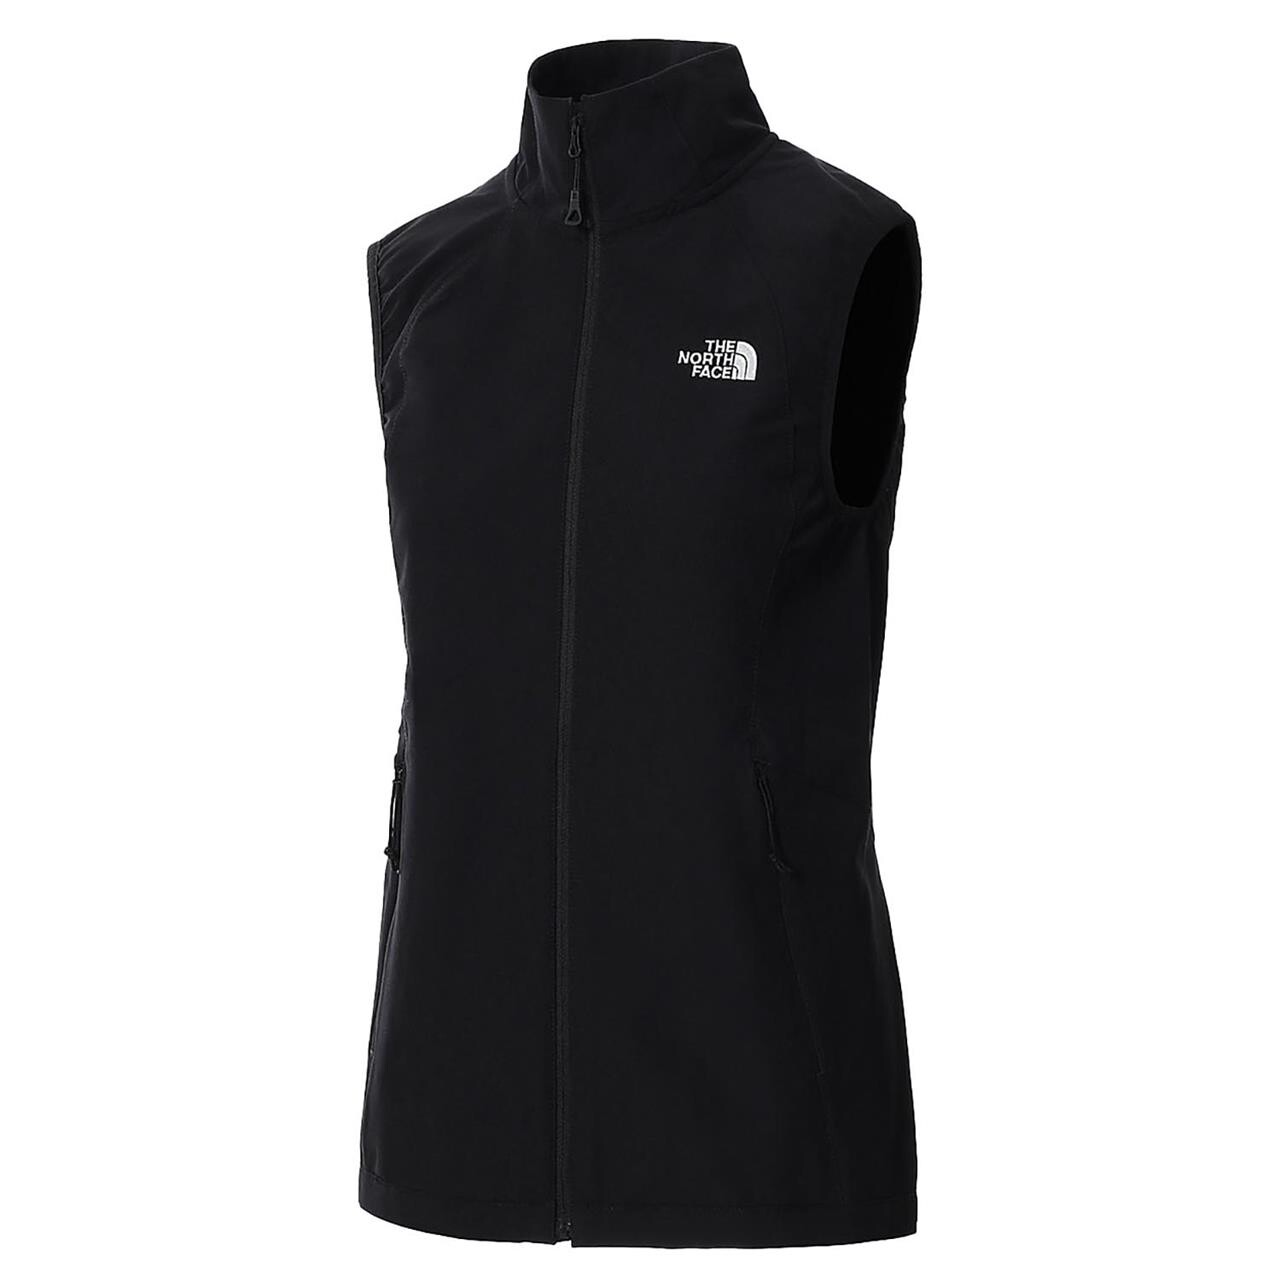 5: The North Face Womens Nimble Vest  (Sort (TNF BLACK) Small)